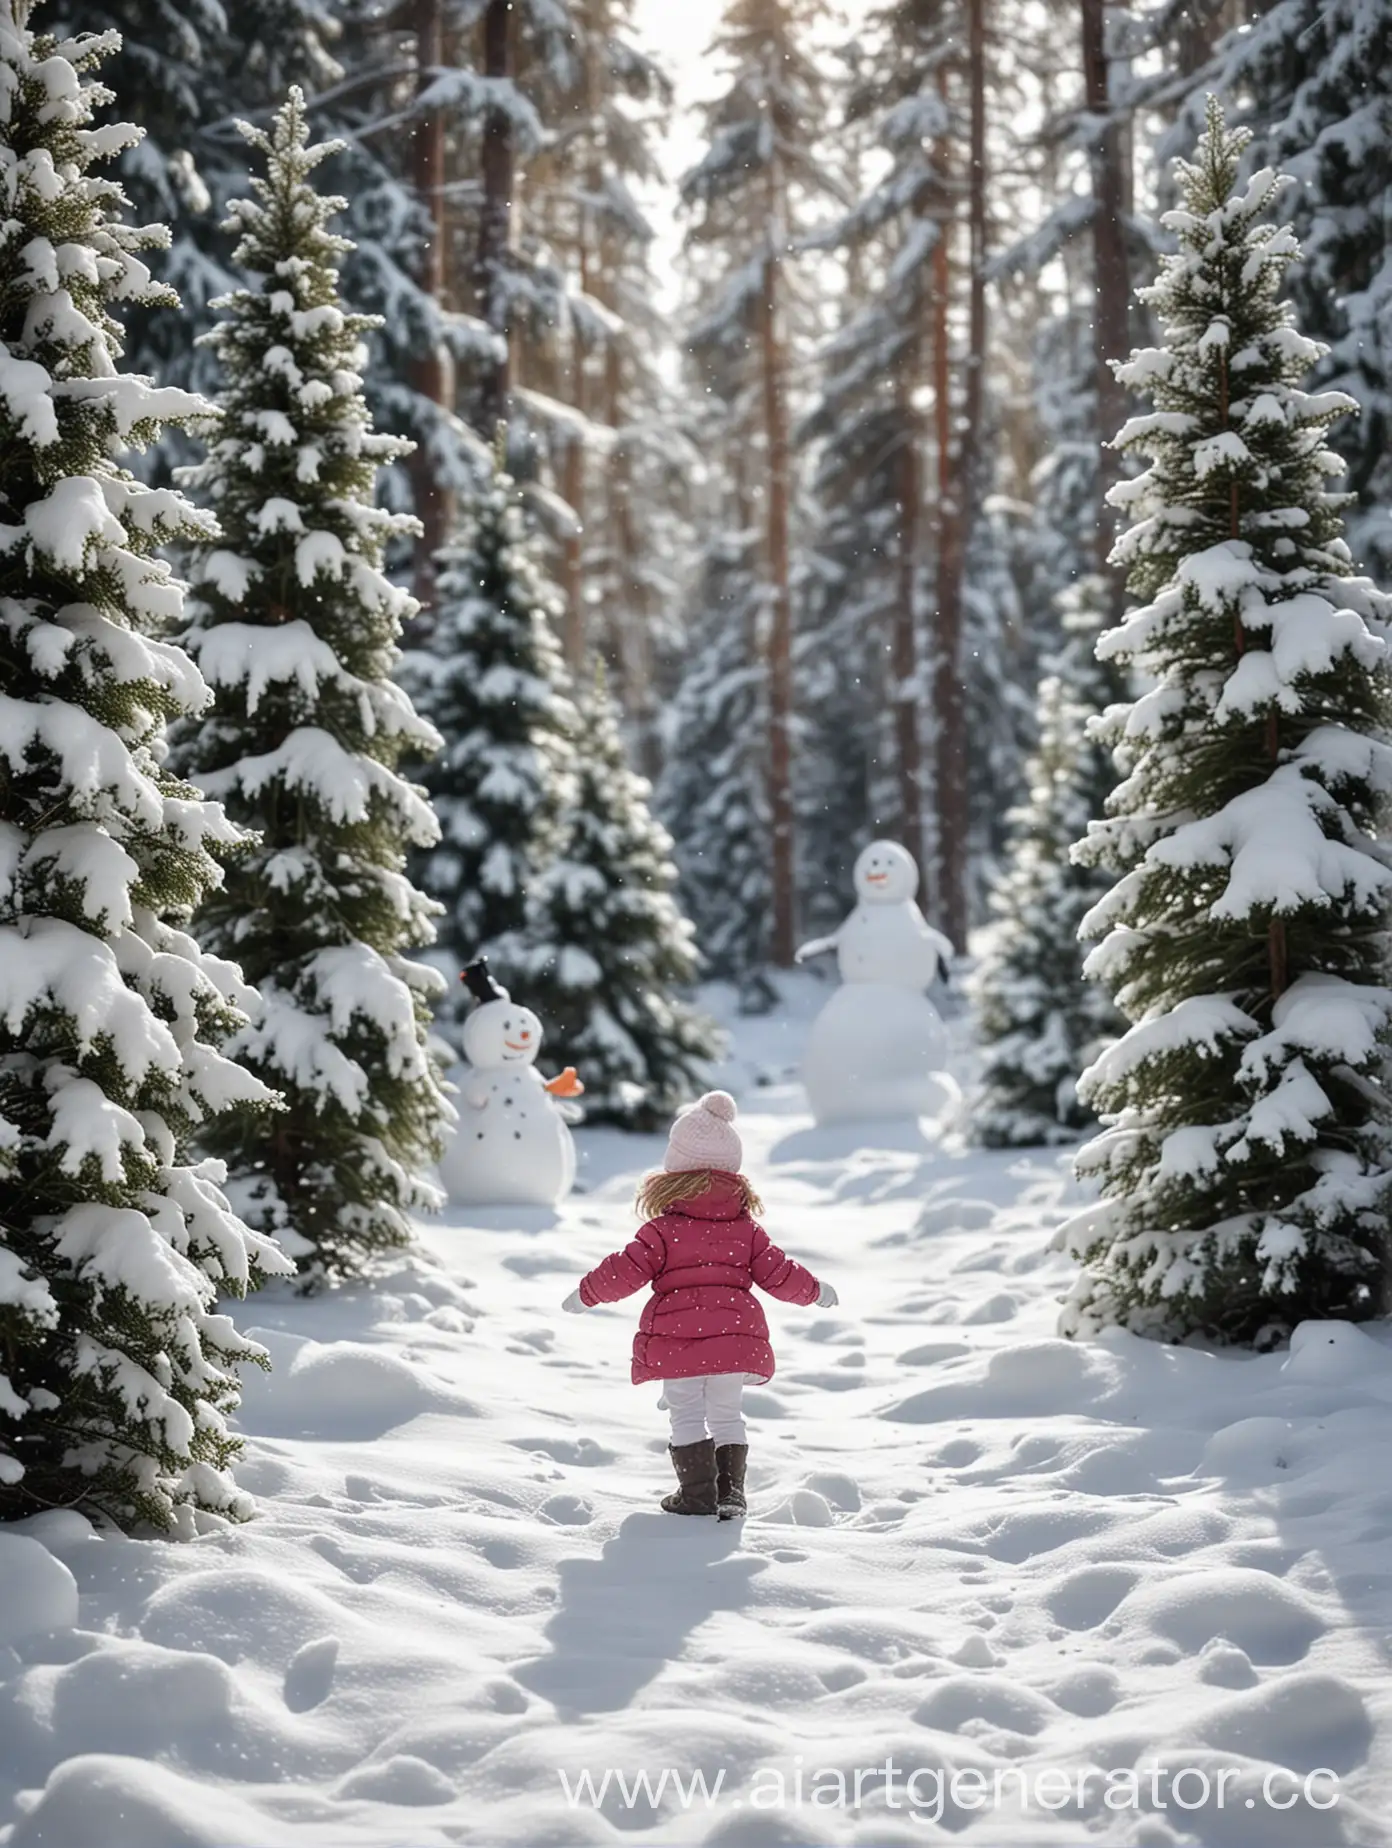 Adorable-Little-Girl-Building-Snowman-in-Winter-Forest-Scene